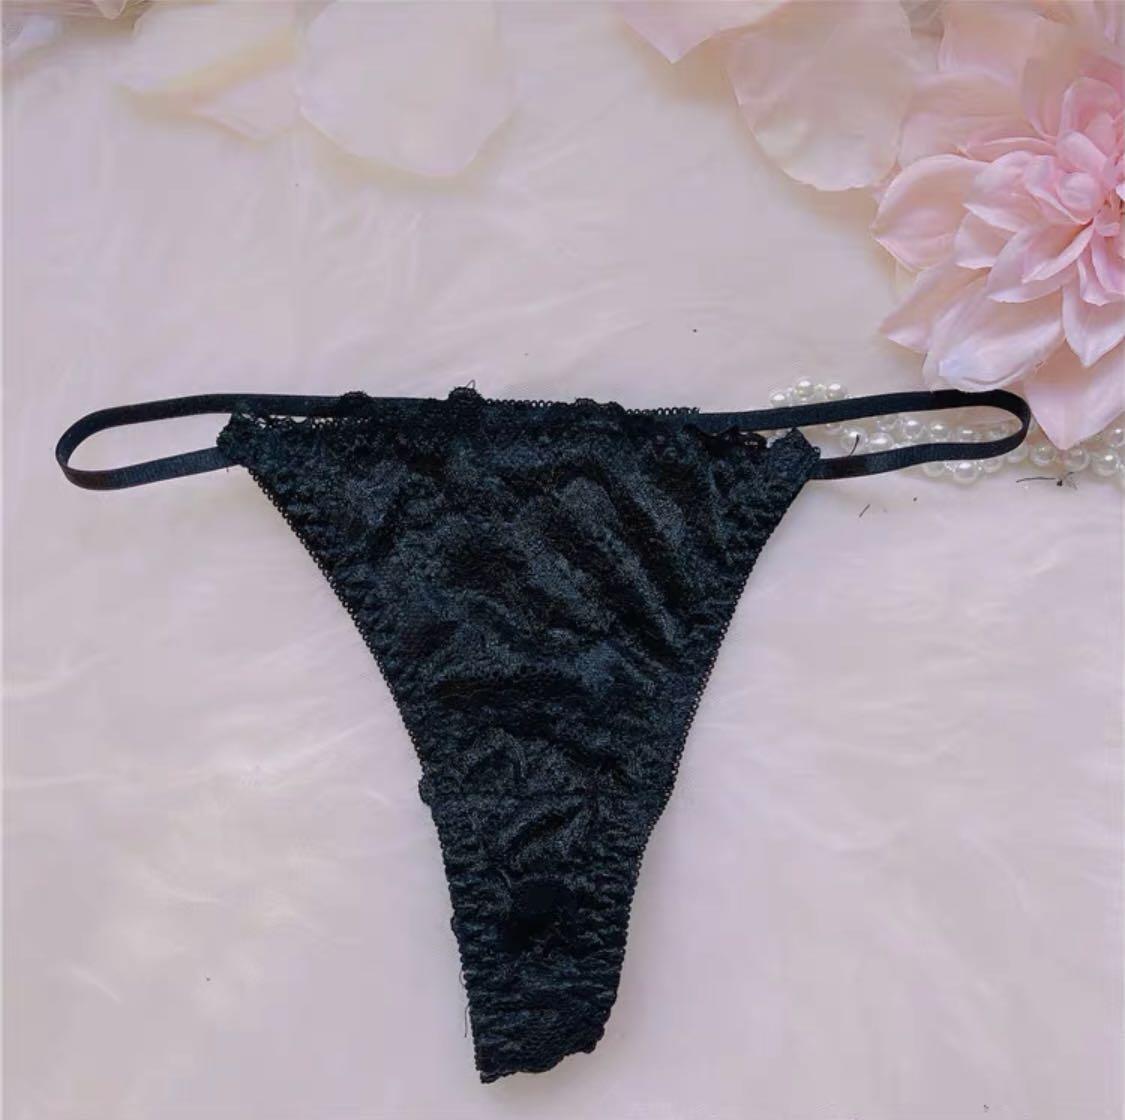 https://media.karousell.com/media/photos/products/2021/7/24/_tback_sexy_underwear_lace_t_b_1627101601_0bd45c1e_progressive.jpg